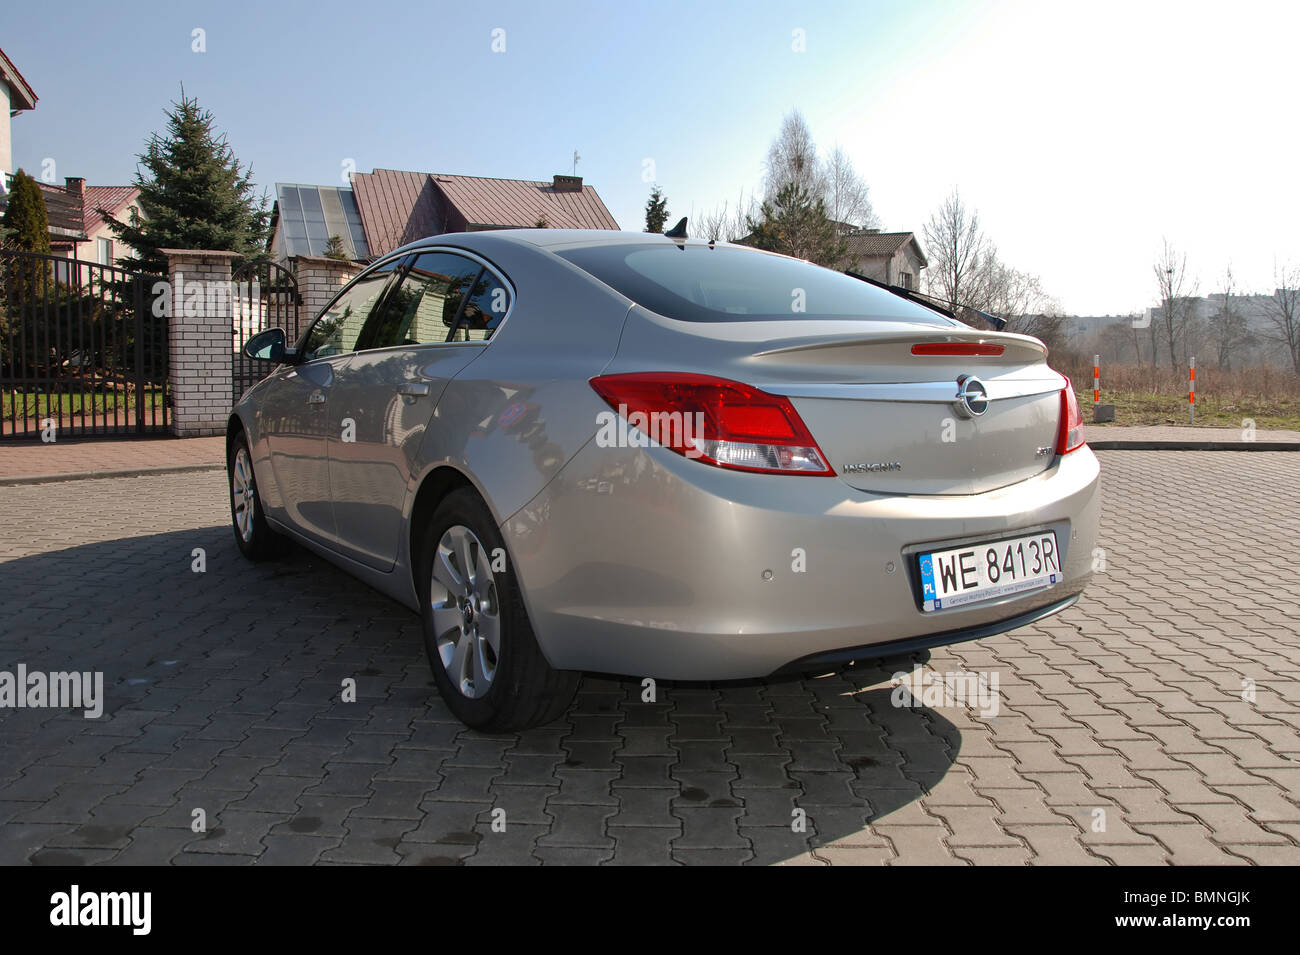 Opel Insignia 1.9 CDTI - 2009 - silver metallic - five doors - German popular higher middle class car, segment D - on street Stock Photo